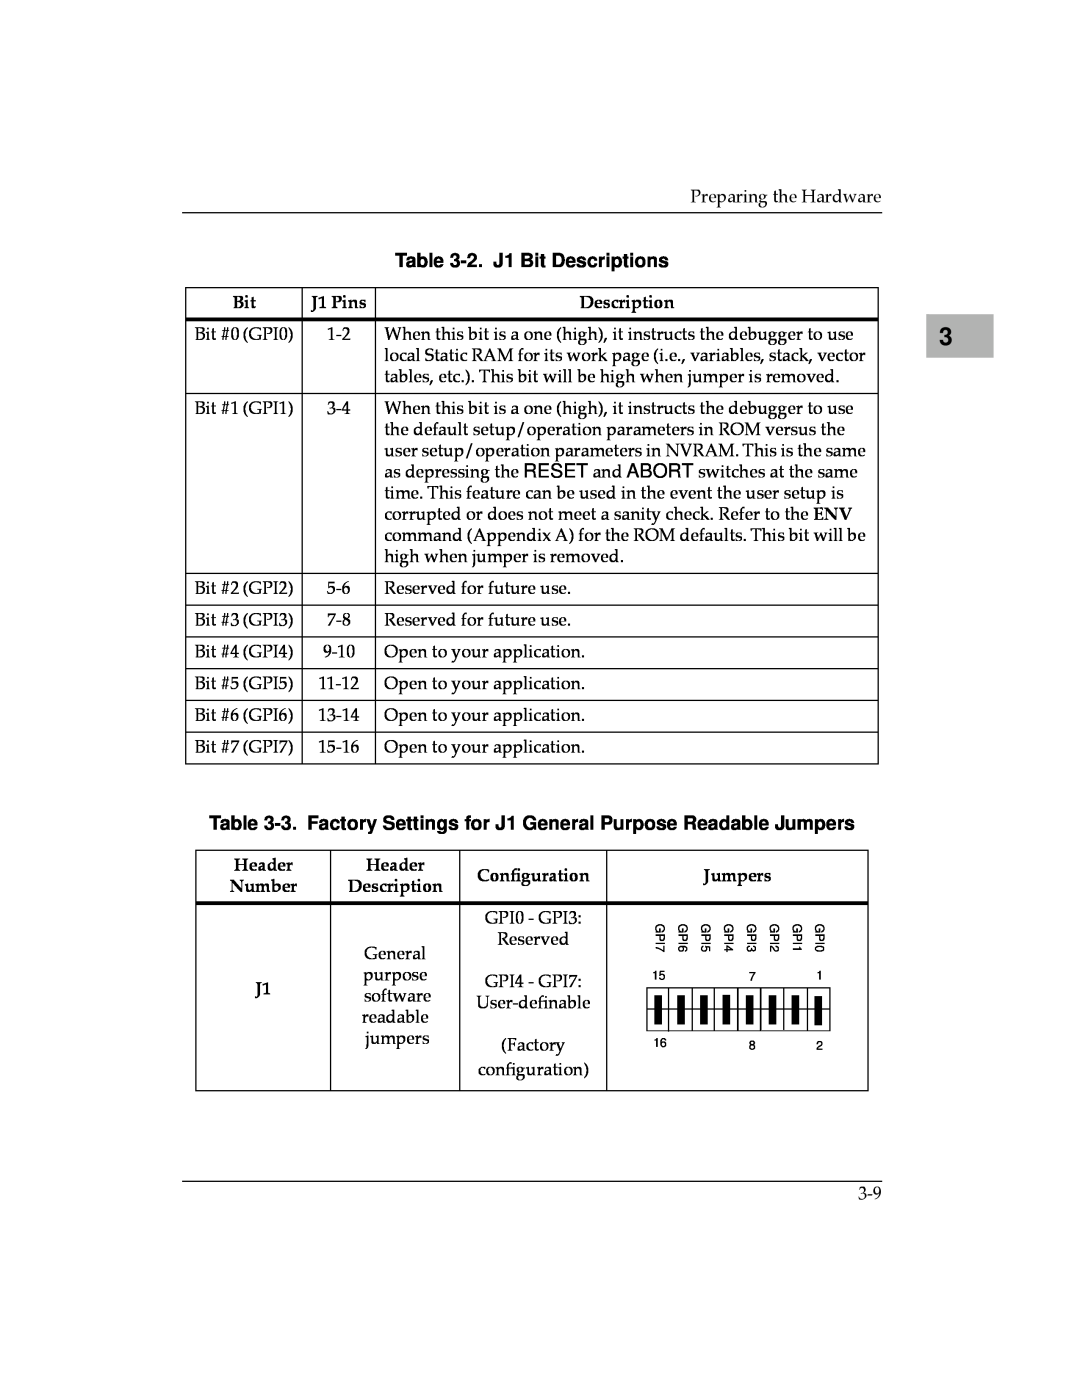 Motorola MVME187 manual 2. J1 Bit Descriptions, 3. Factory Settings for J1 General Purpose Readable Jumpers, GPI0 - GPI3 